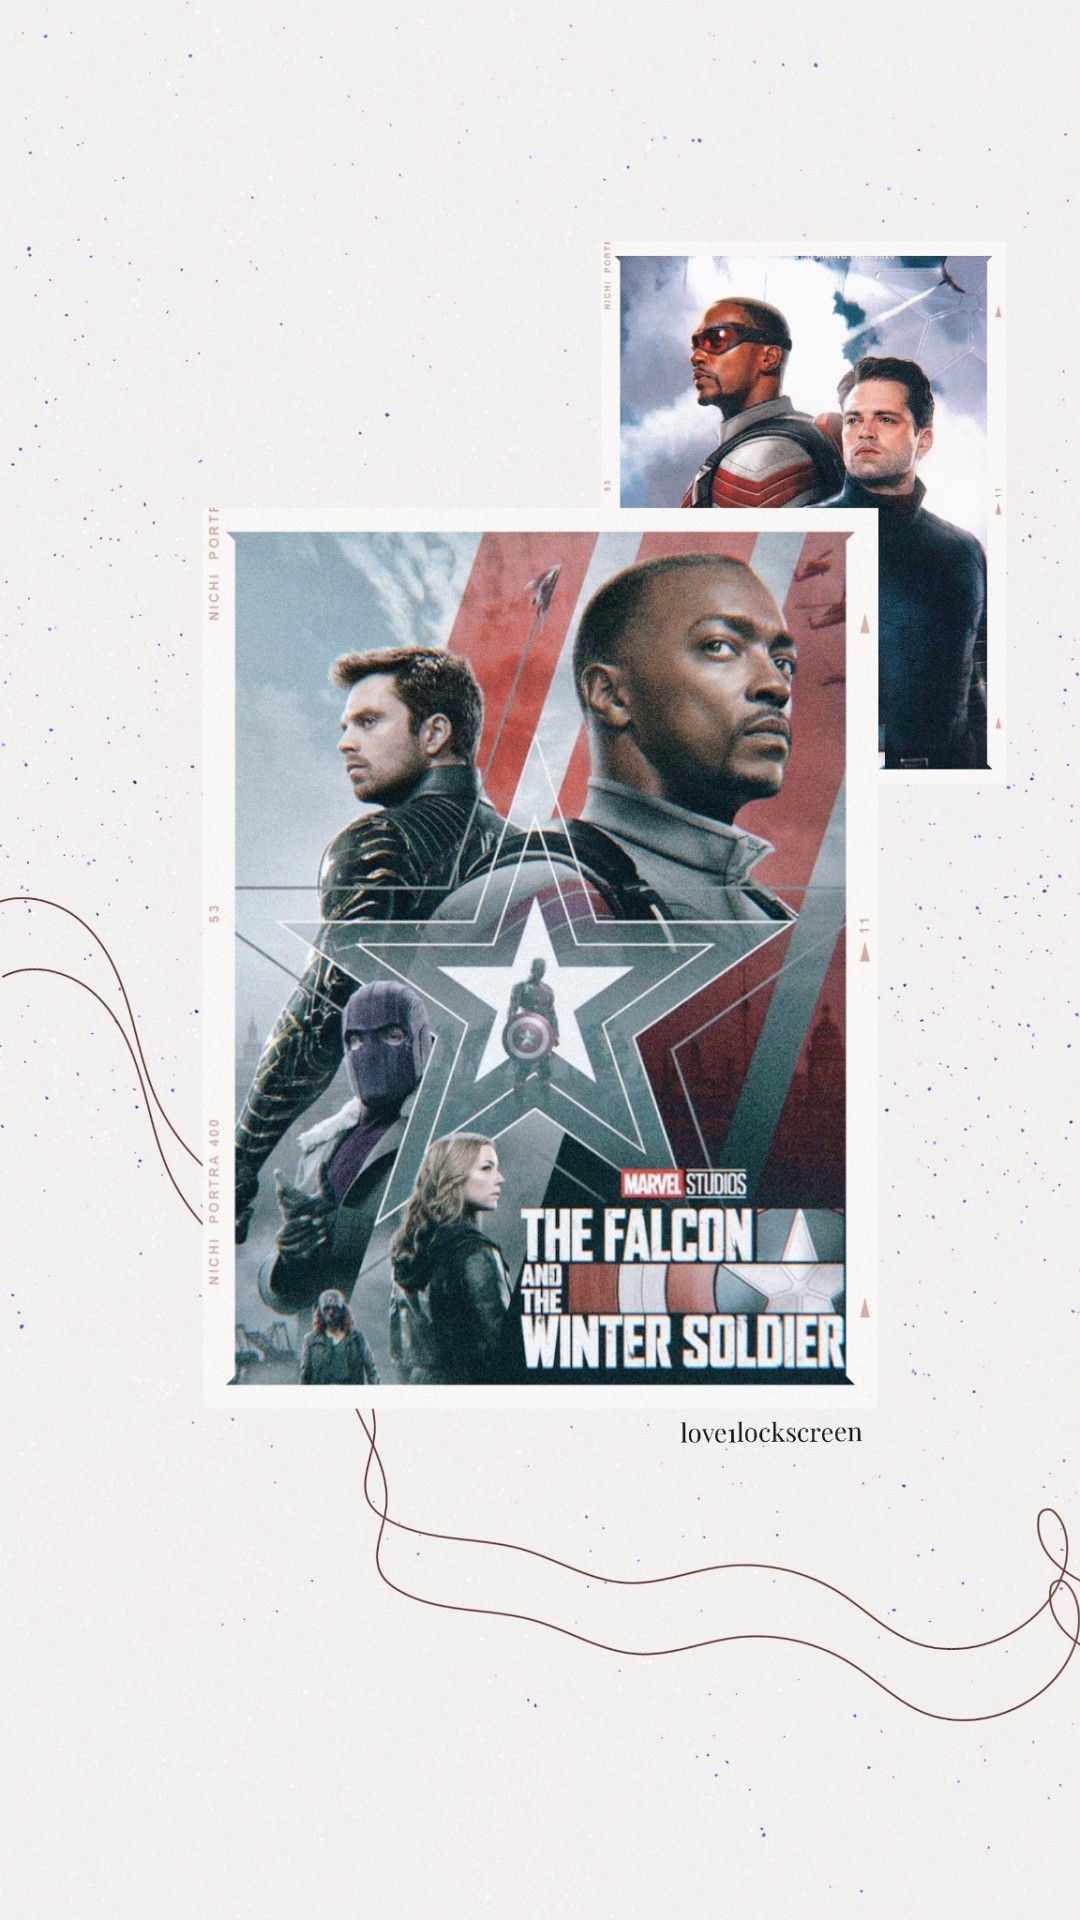 Marvel Tfatws Poster Wallpapers